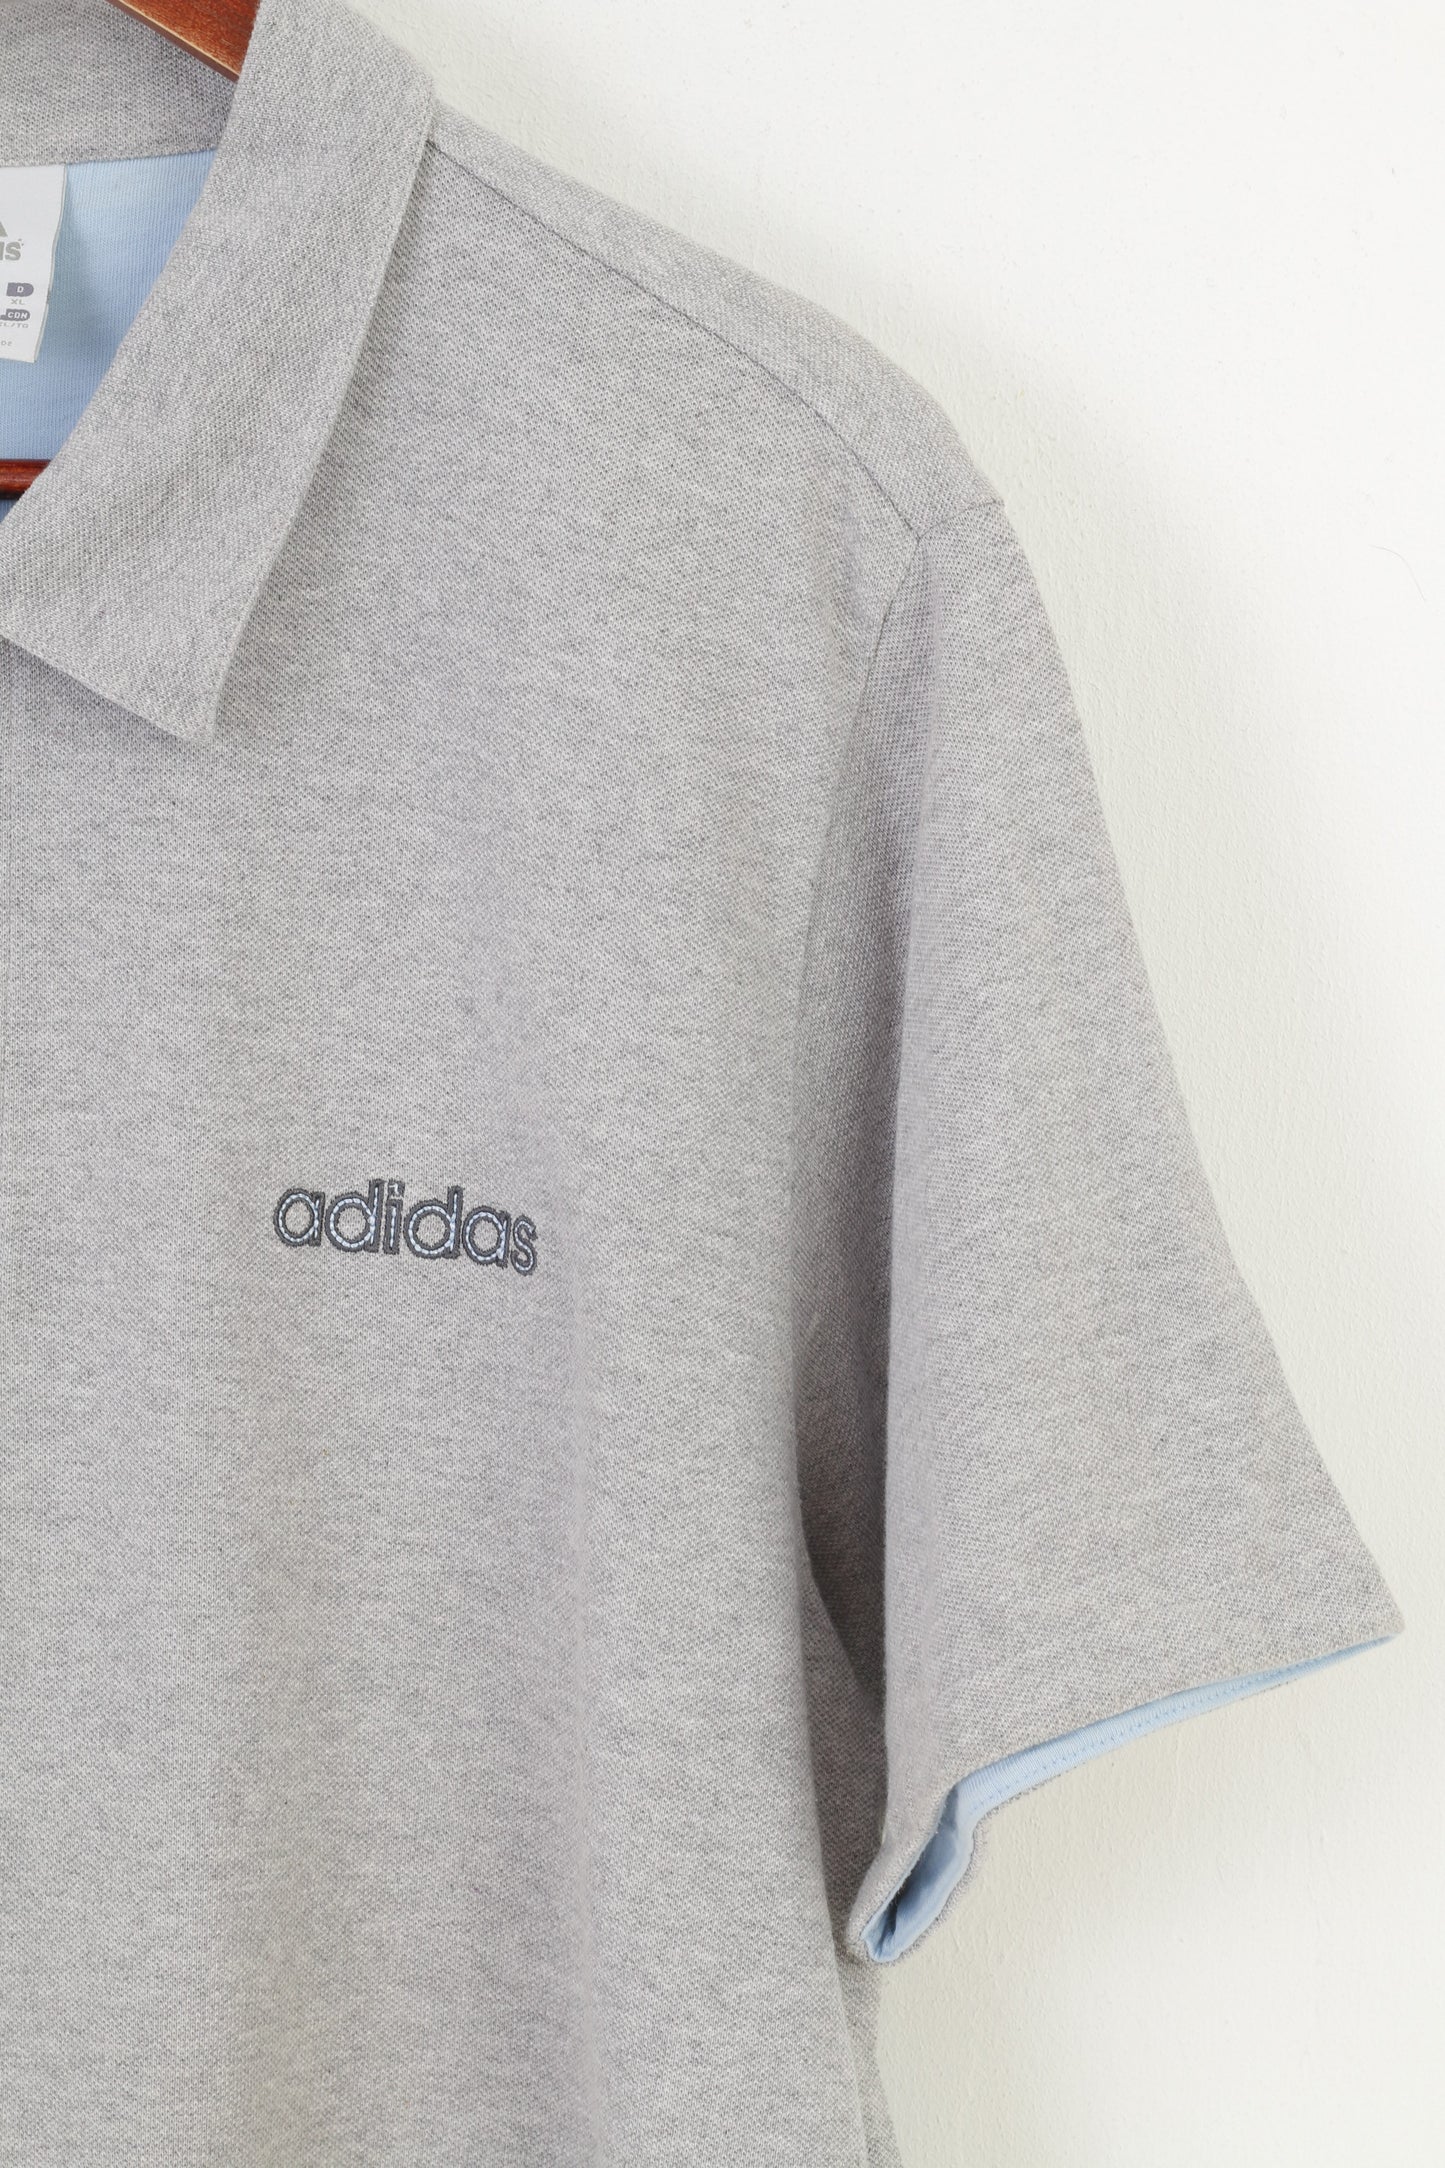 Adidas Homme XL Polo Gris Sport Manches Courtes Coton Vintage Top